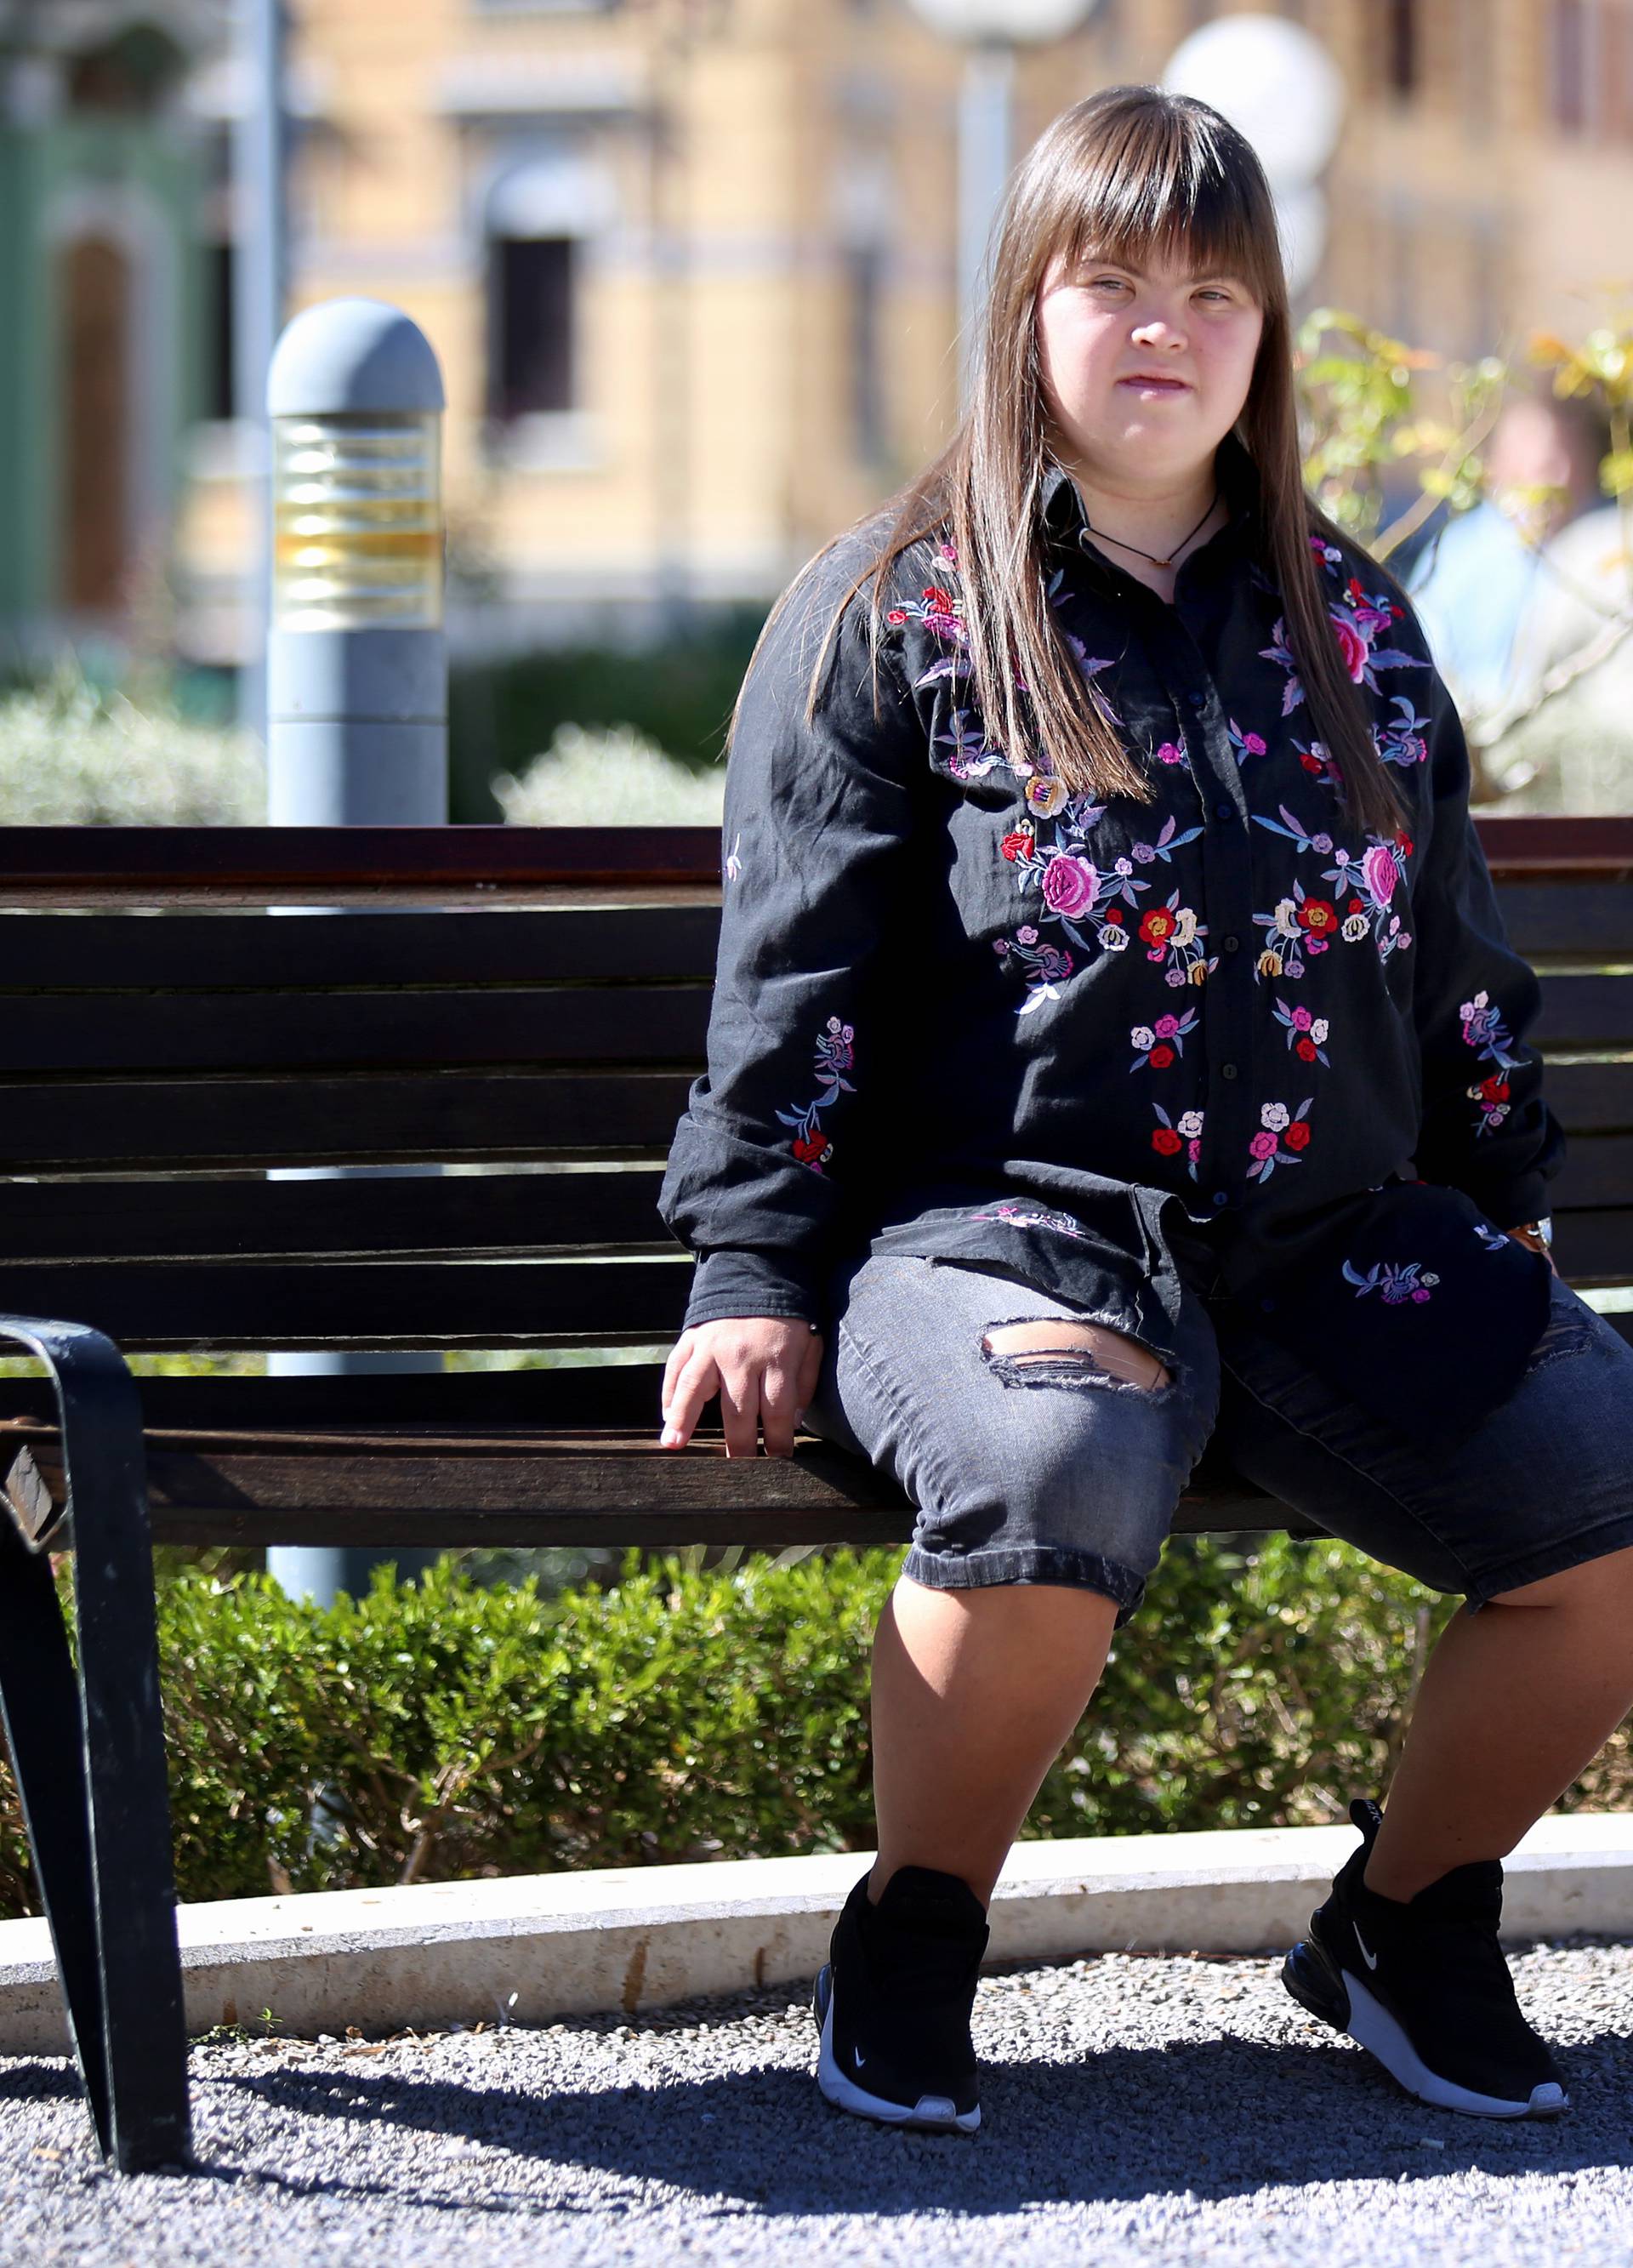 Riječanka Isabella ima sindrom Down, ali živi punim plućima